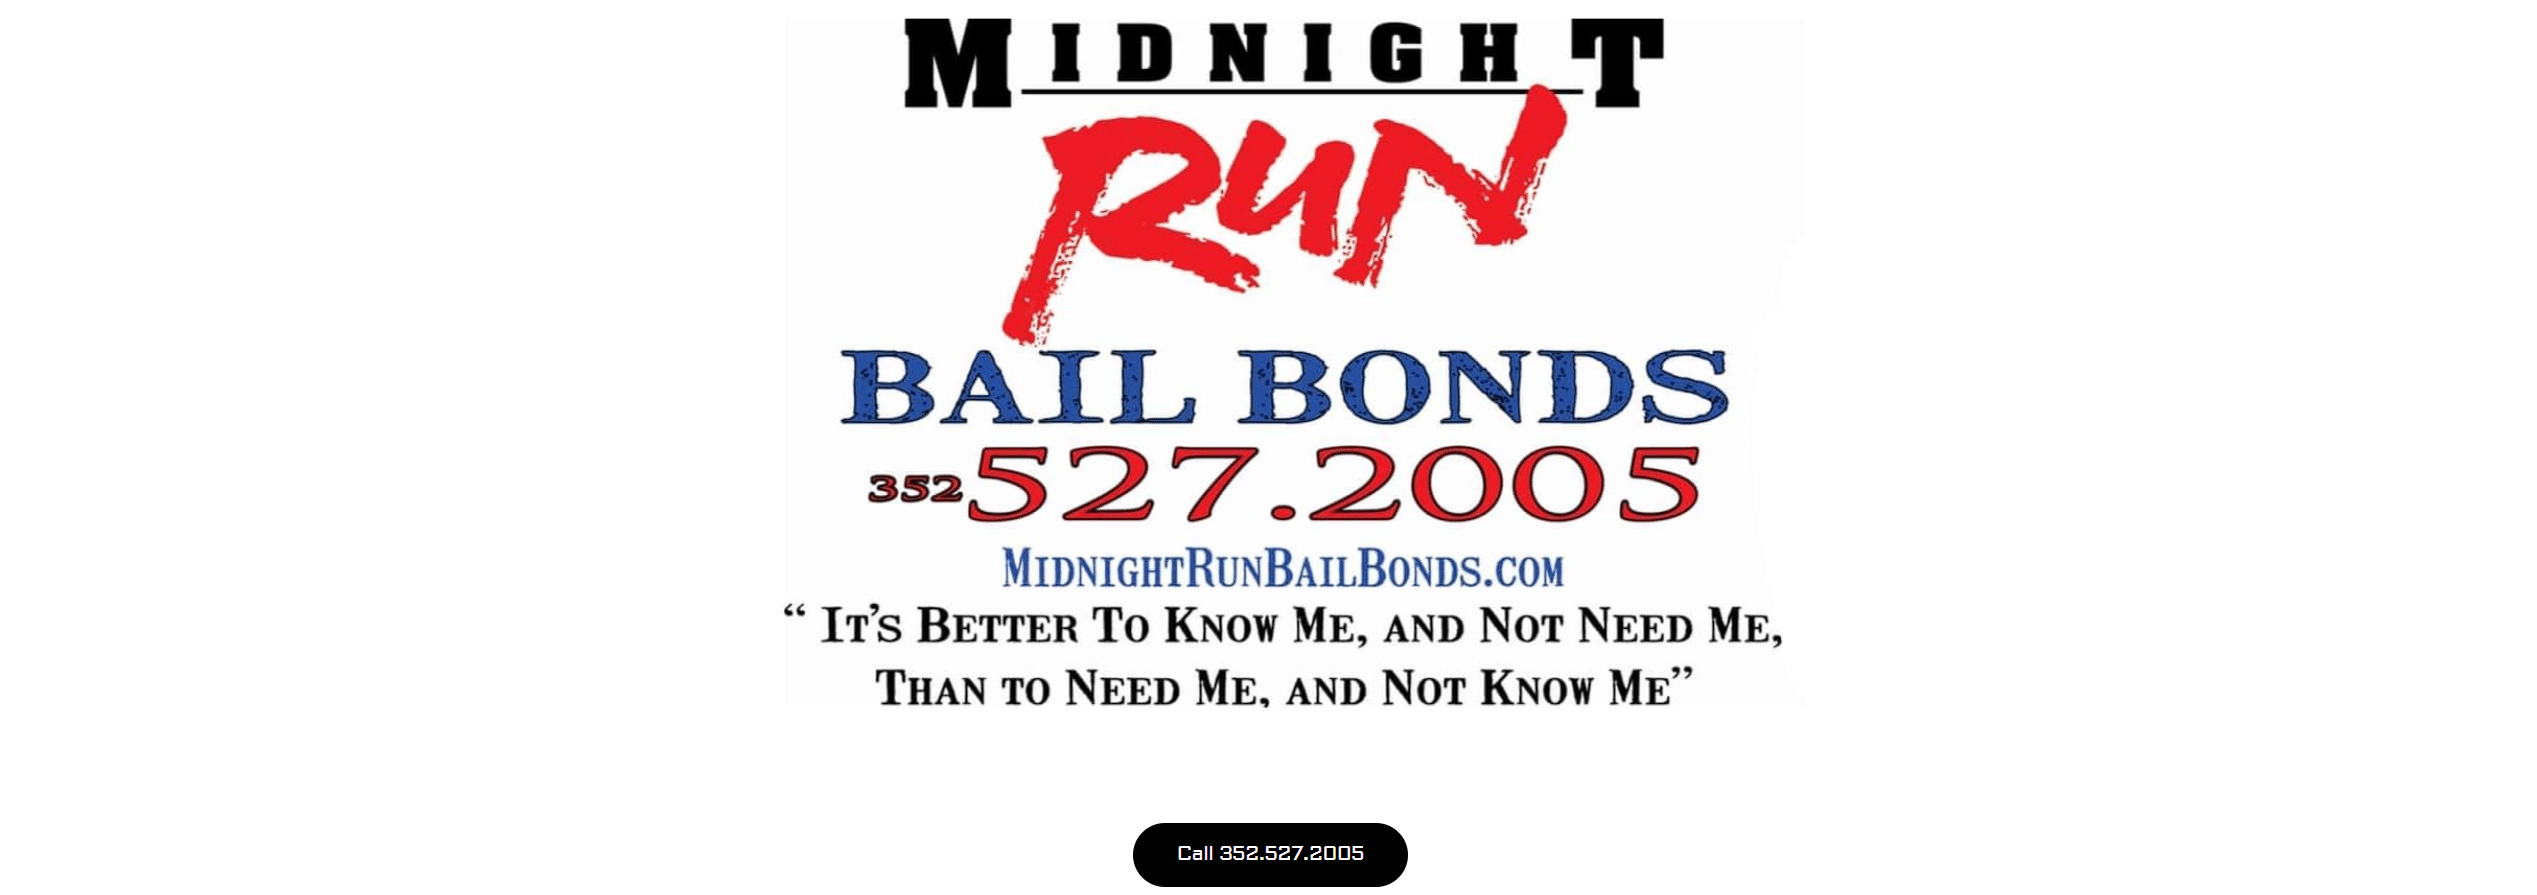 Midnight Run Bail Bonds